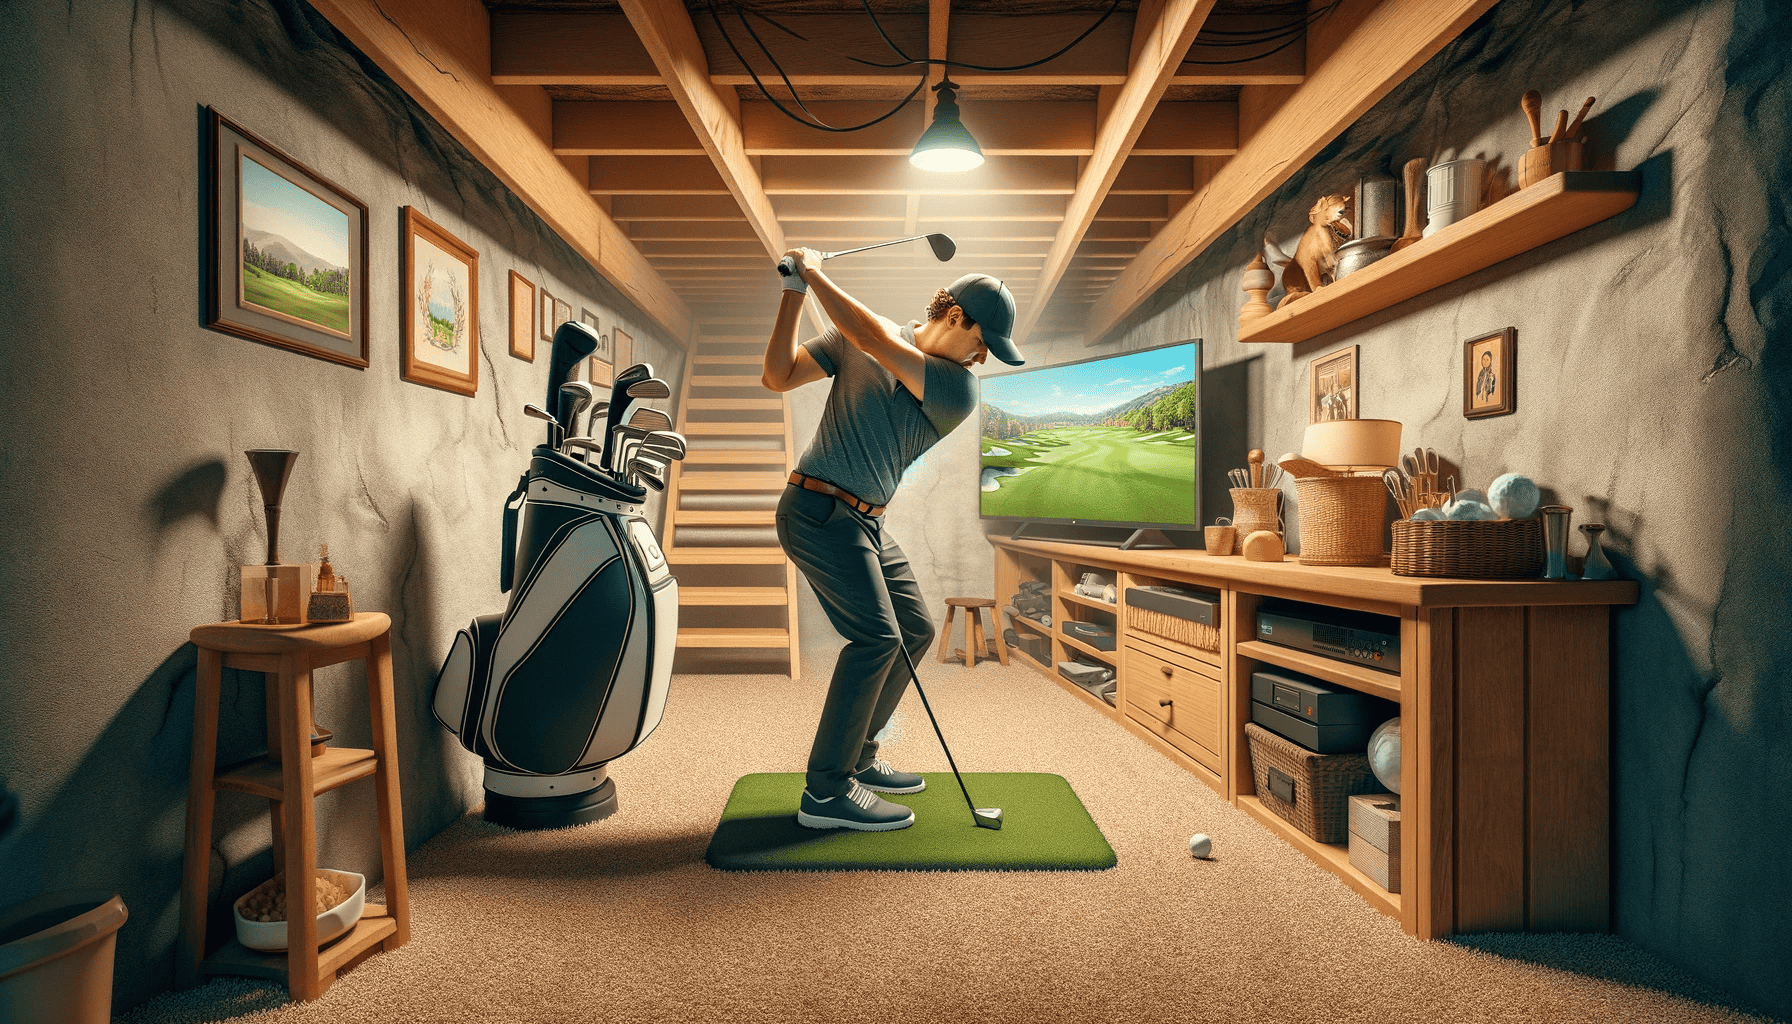 Golf simulator space